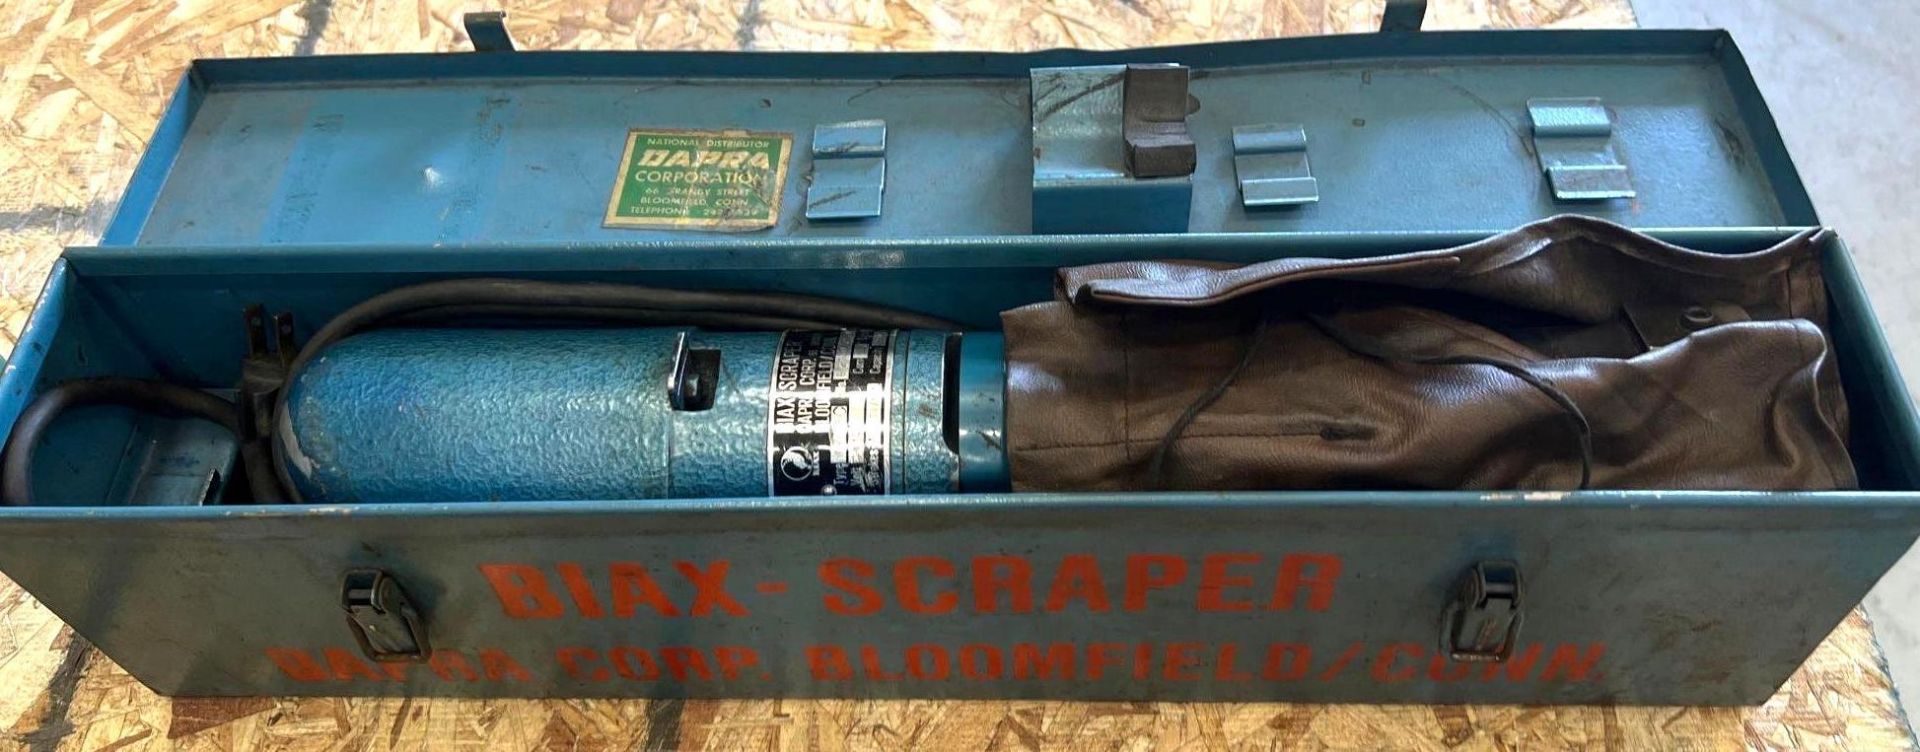 Biax IV/EB Power Scraper with Case